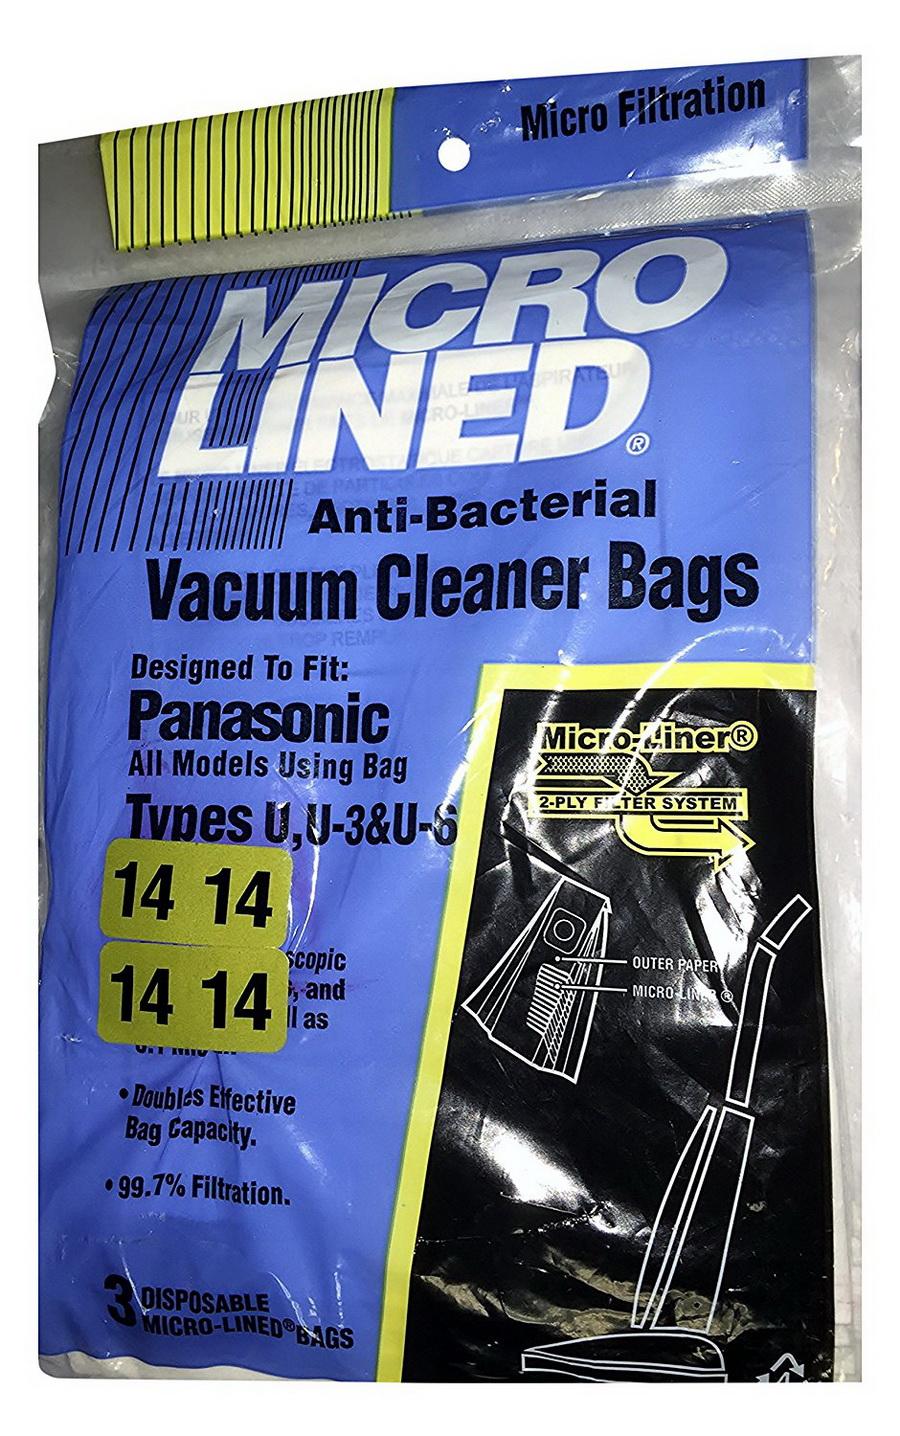 Microlined Anti-Bacterial Vacuum Cleaner Bags, Panasonic types U, U-3 & U-6